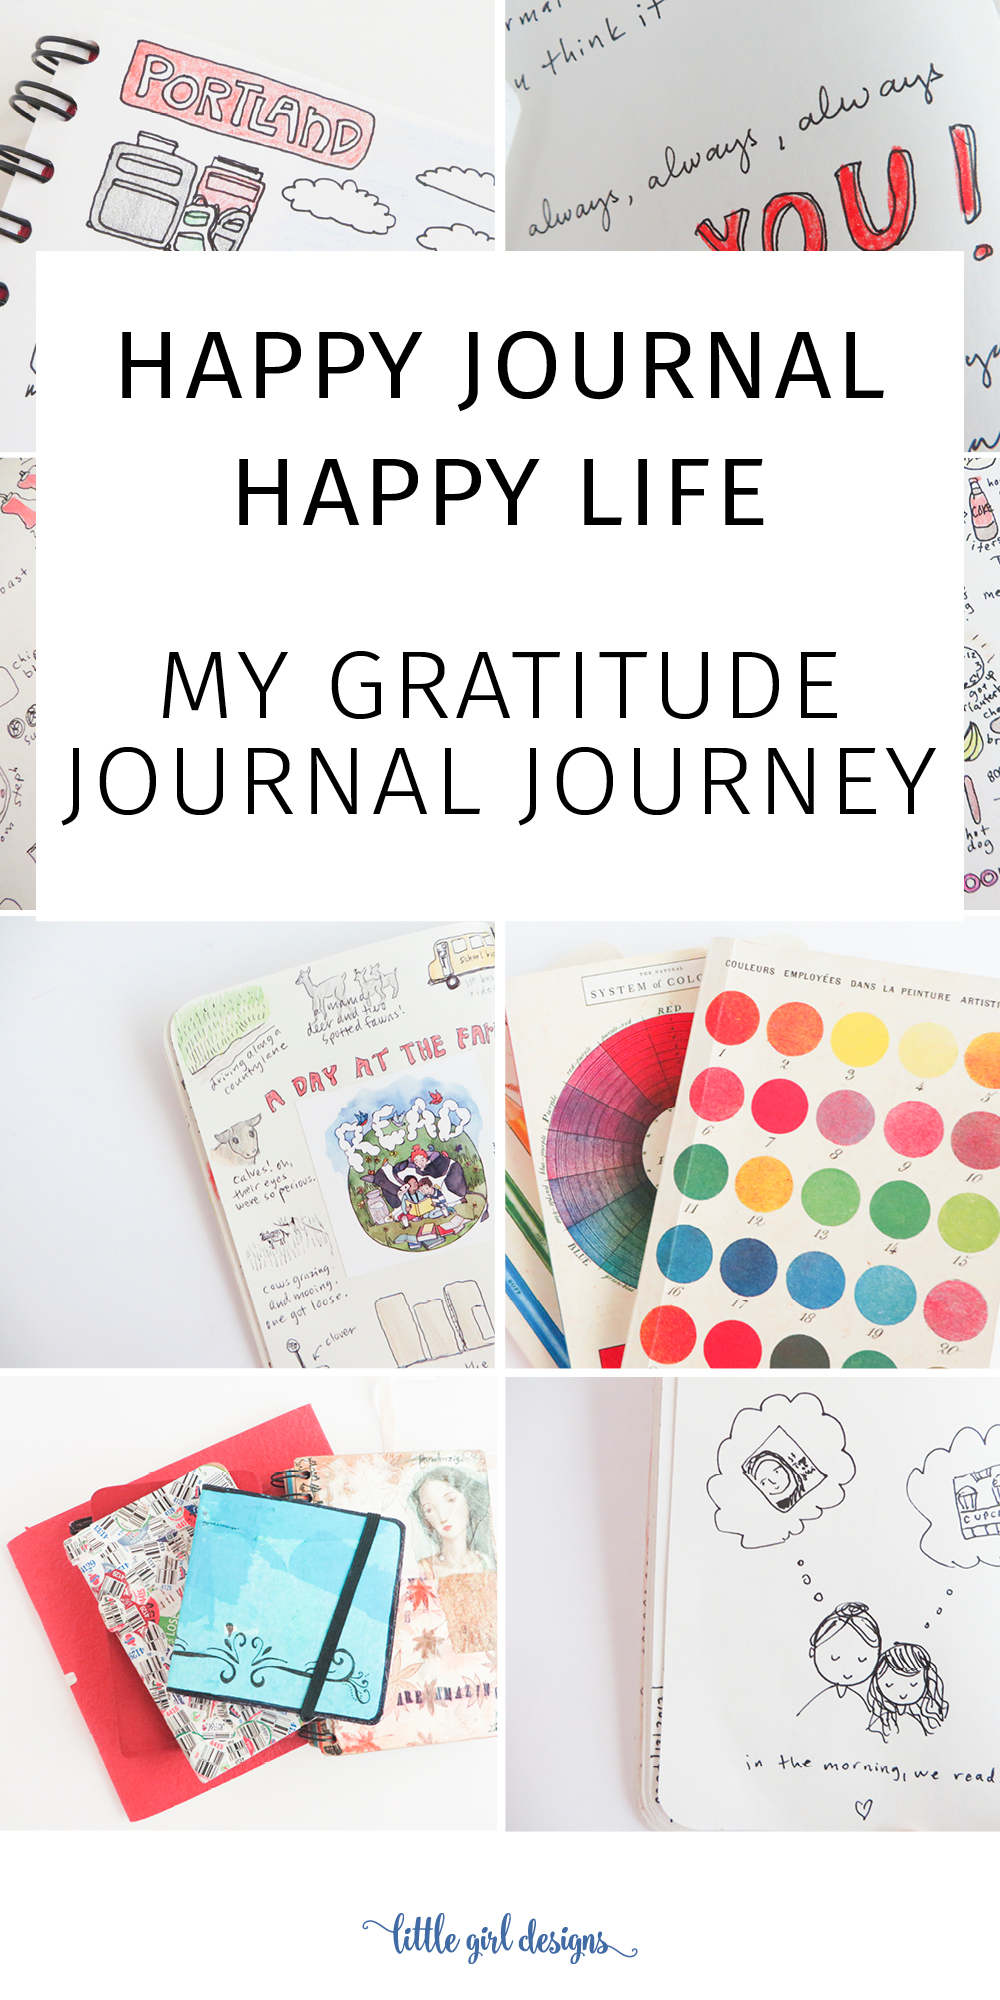 Happy Journal, Happy Life — My Gratitude Journal Journey